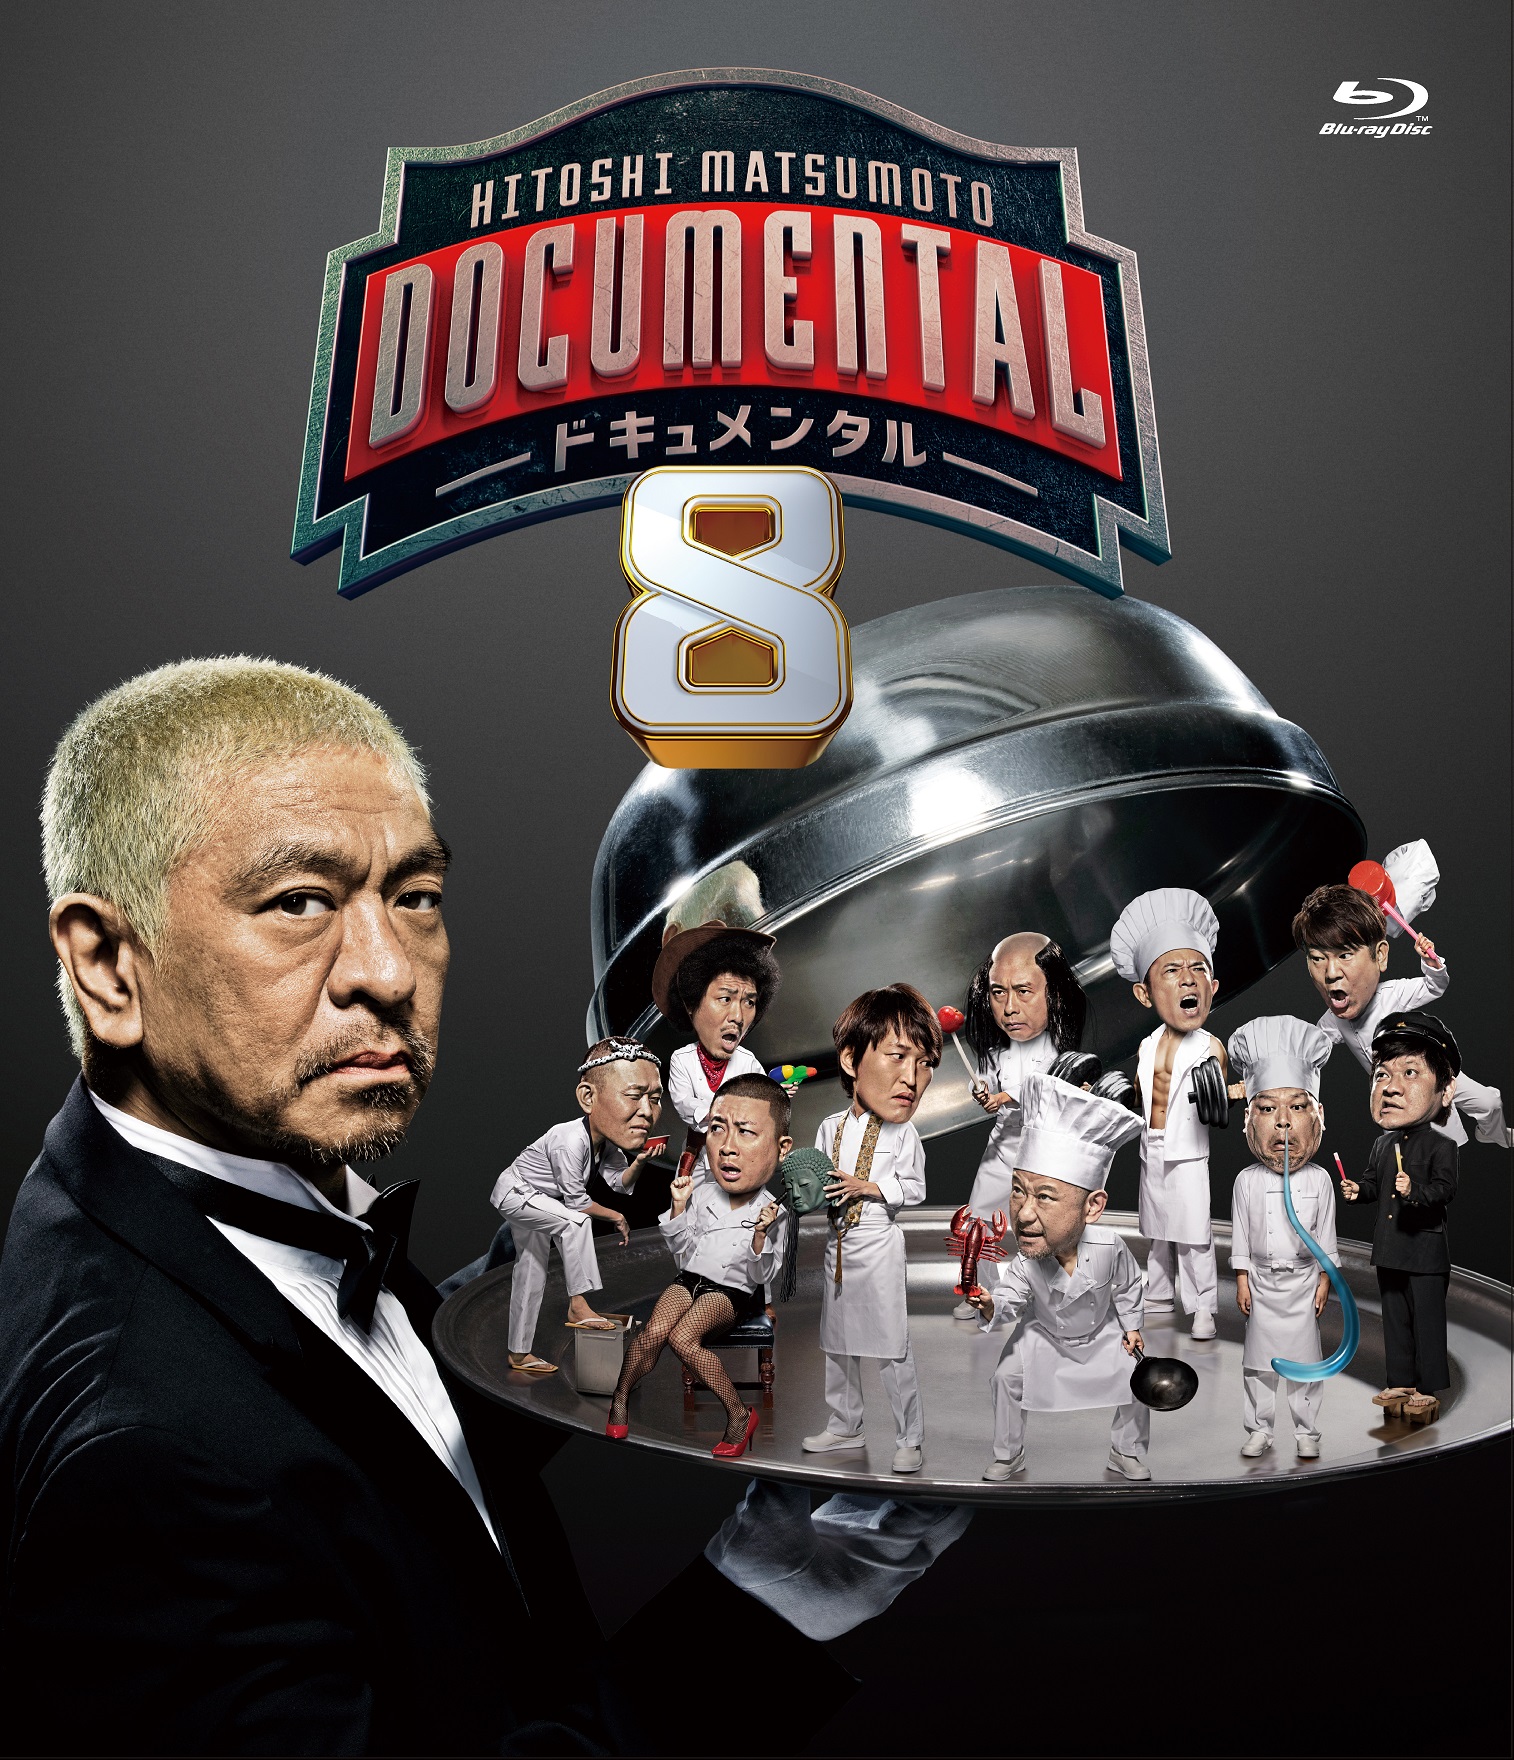 HITOSHI MATSUMOTO Presentsドキュメンタル シーズン 8 & 9 DVD & Blu